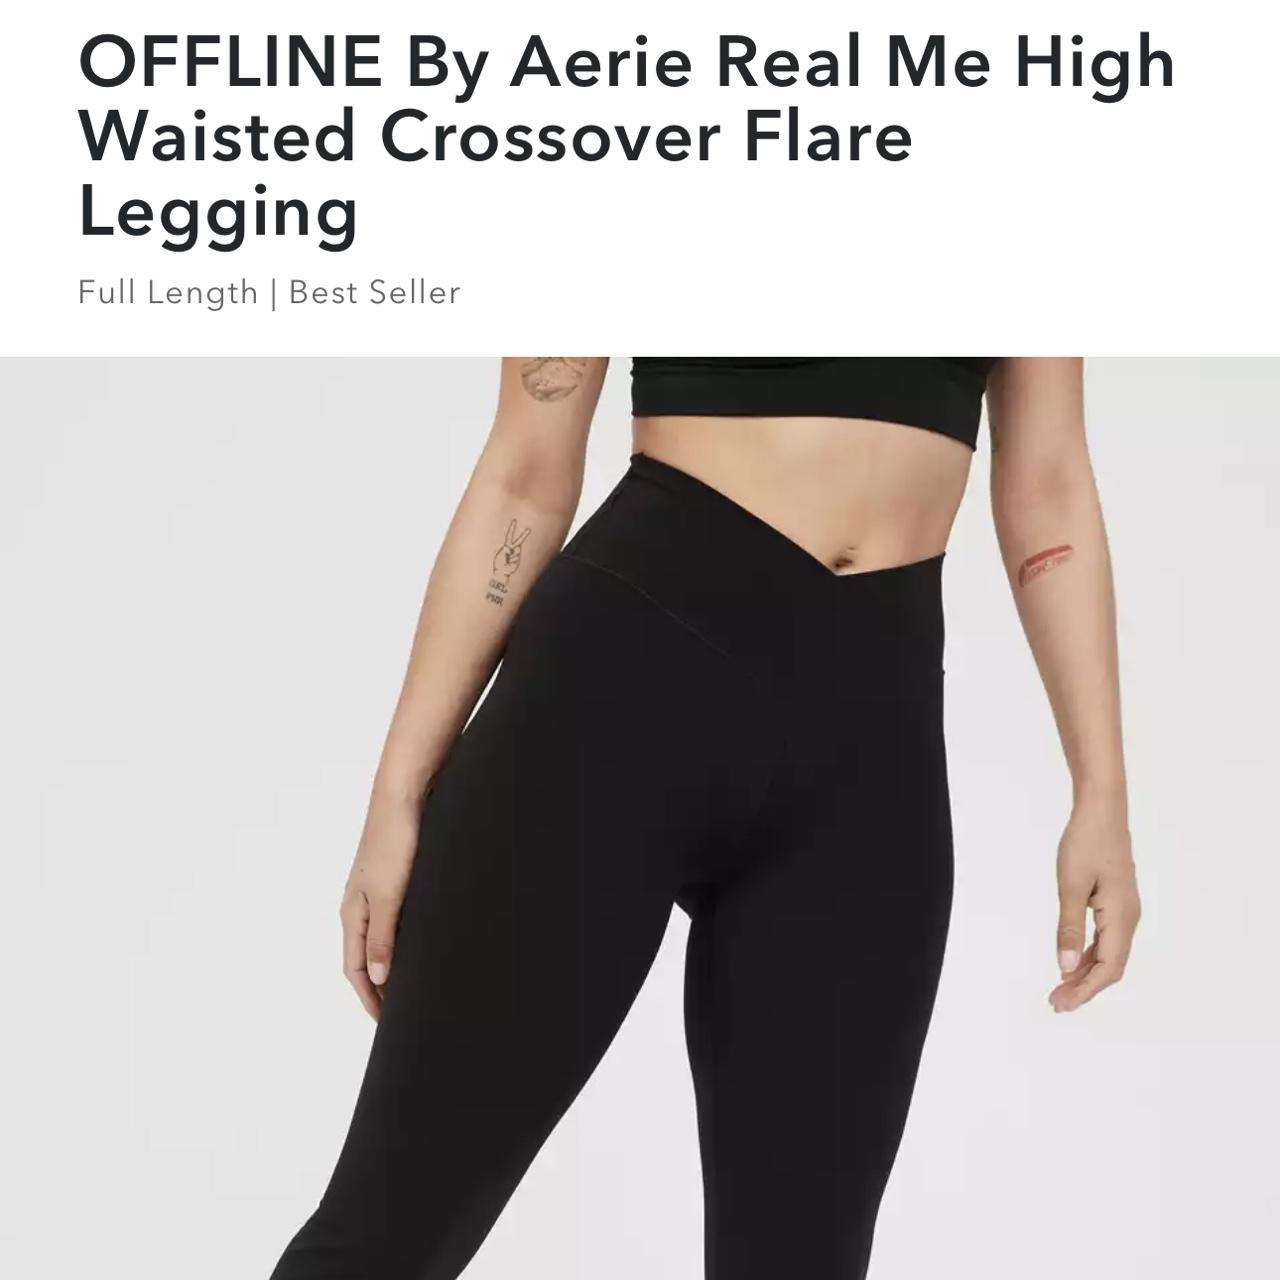 Aerie - OFFLINE By Aerie Real Me High Waisted Crossover Flare Legging on  Designer Wardrobe